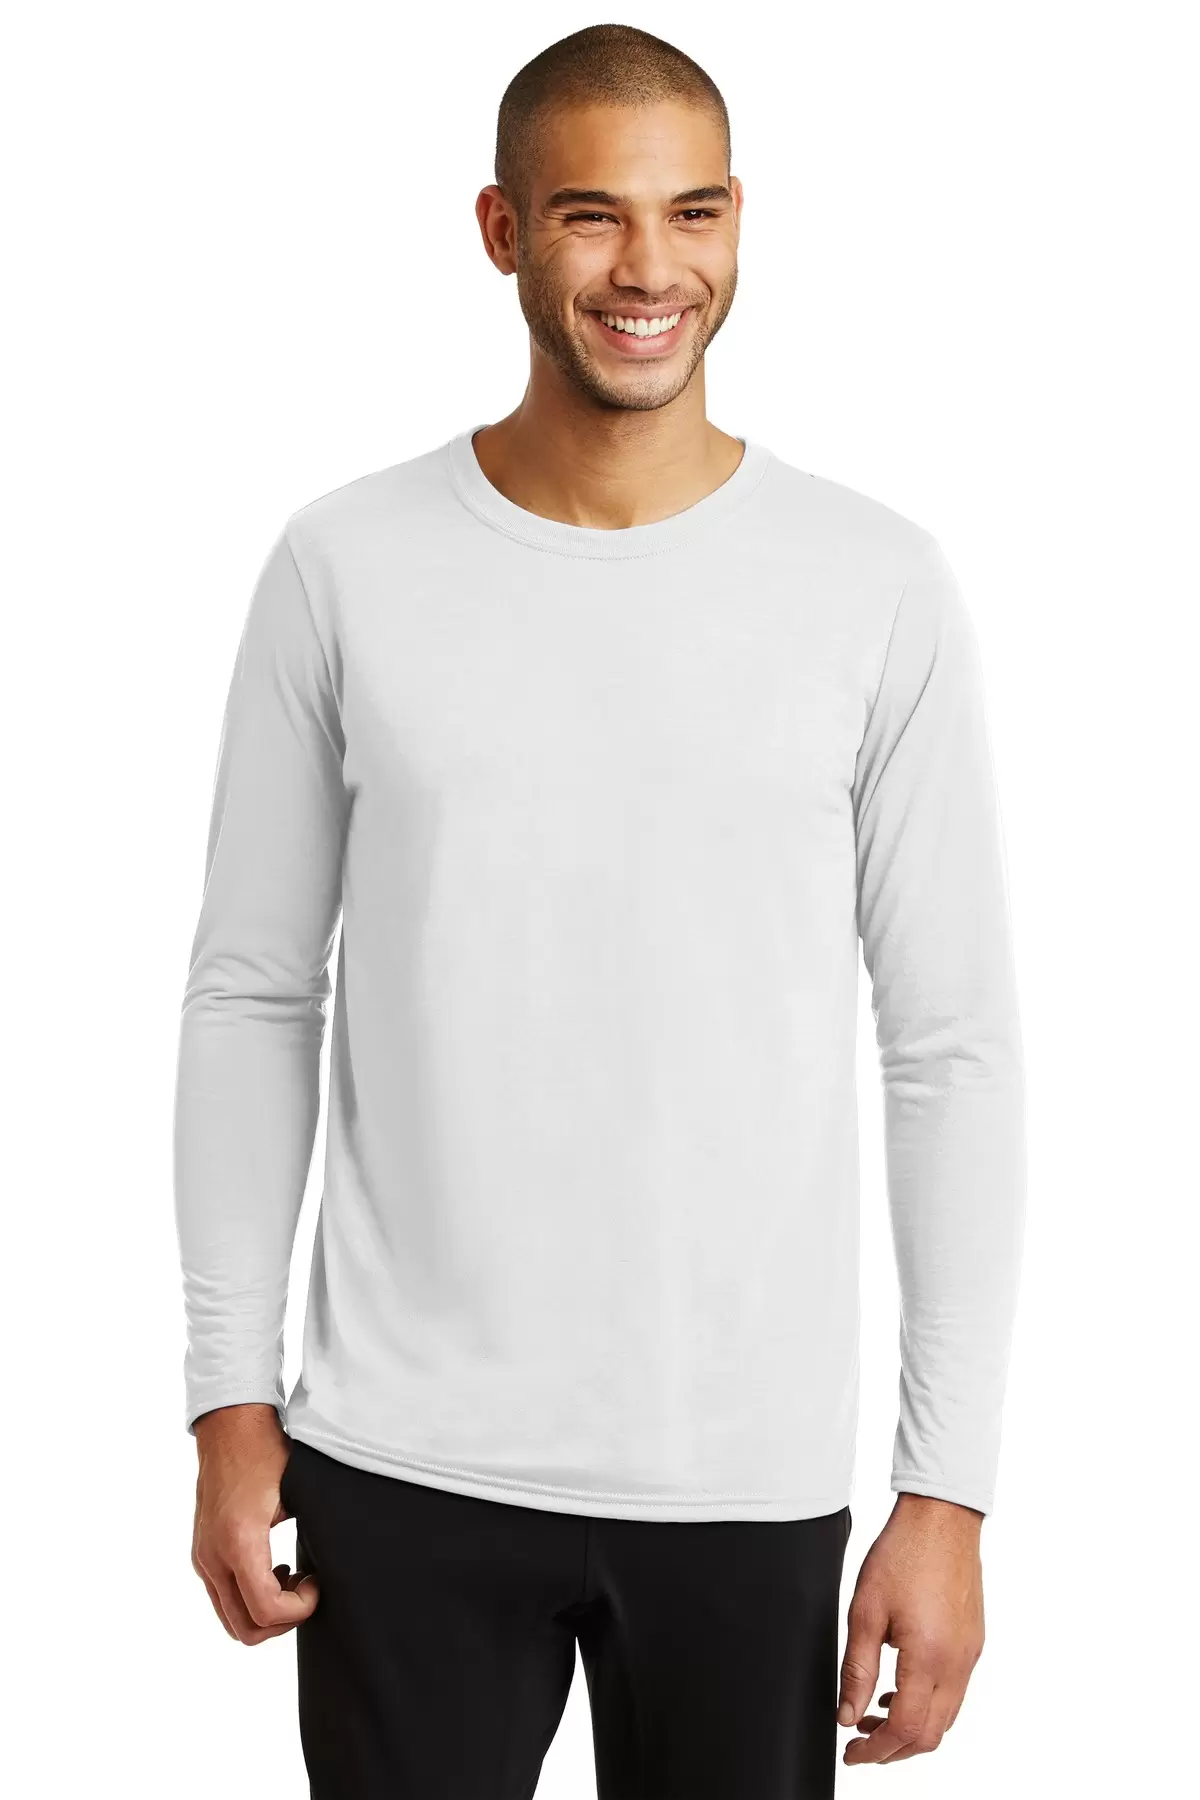 42400 Gildan Adult Core Performance Long-Sleeve T-Shirt - From $4.33